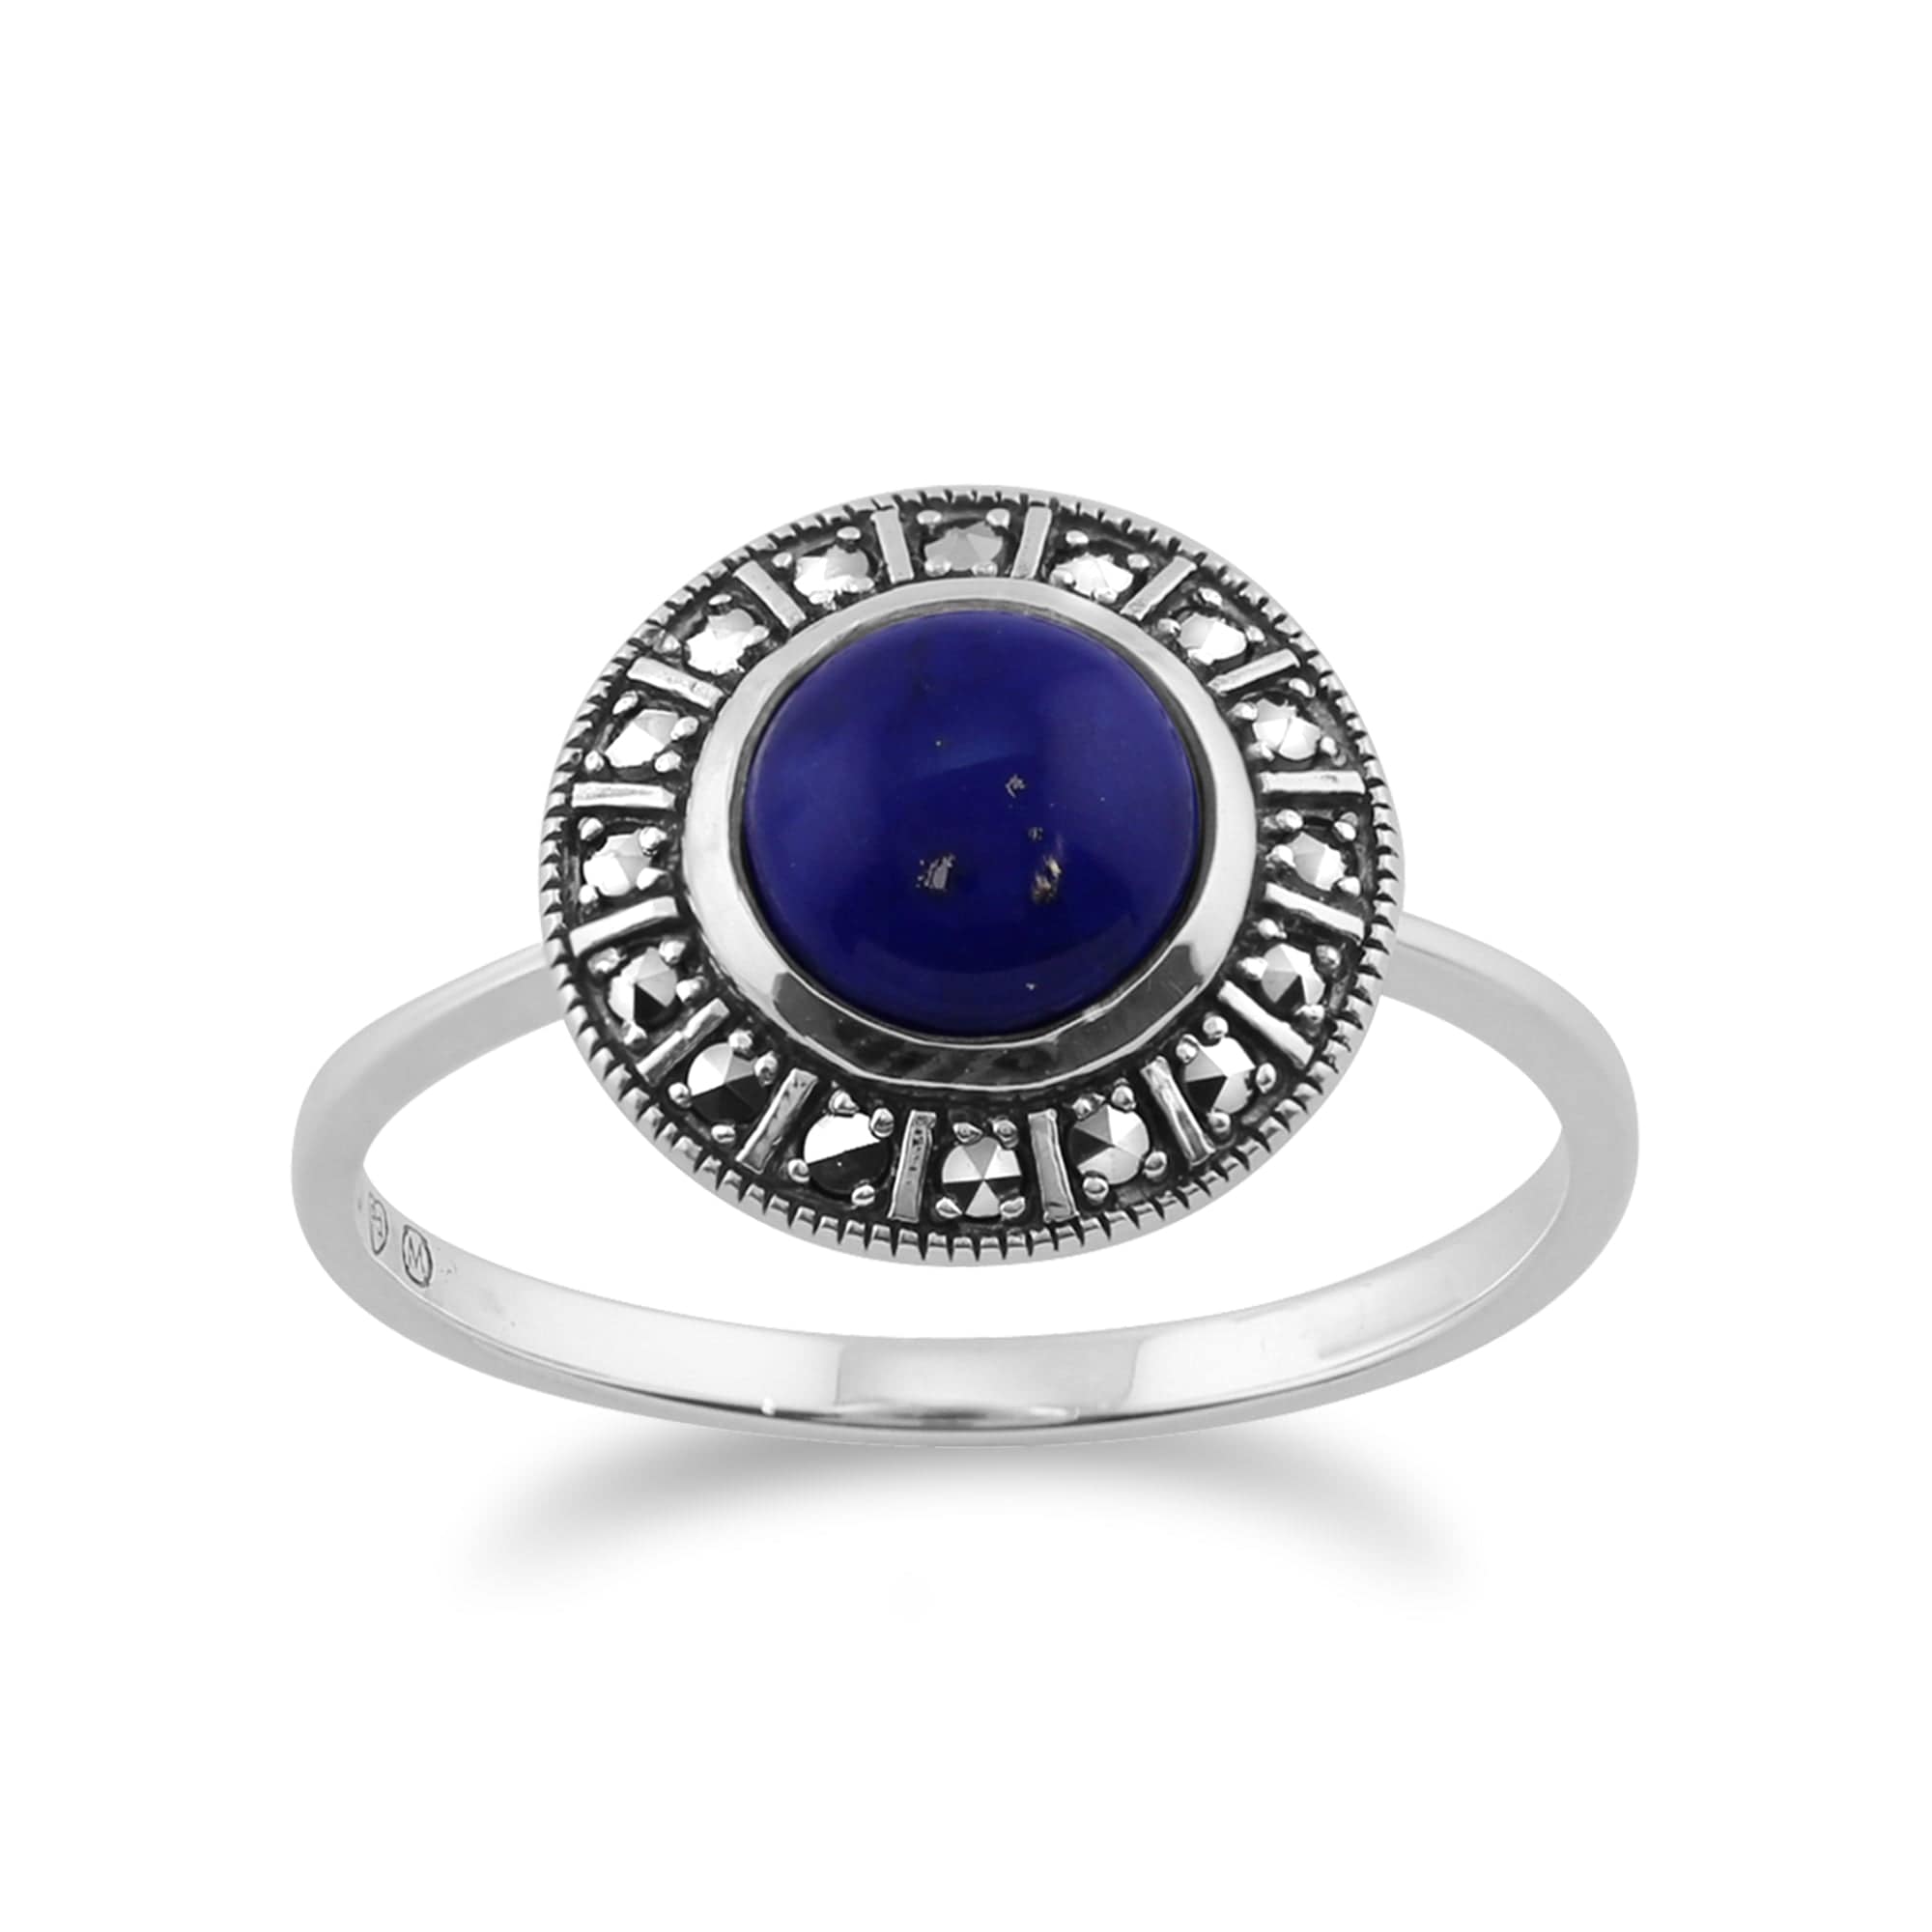 Art Deco Style Round Lapis Lazuli & Marcasite Halo Pendant & Ring Set in 925 Sterling Silver - Gemondo